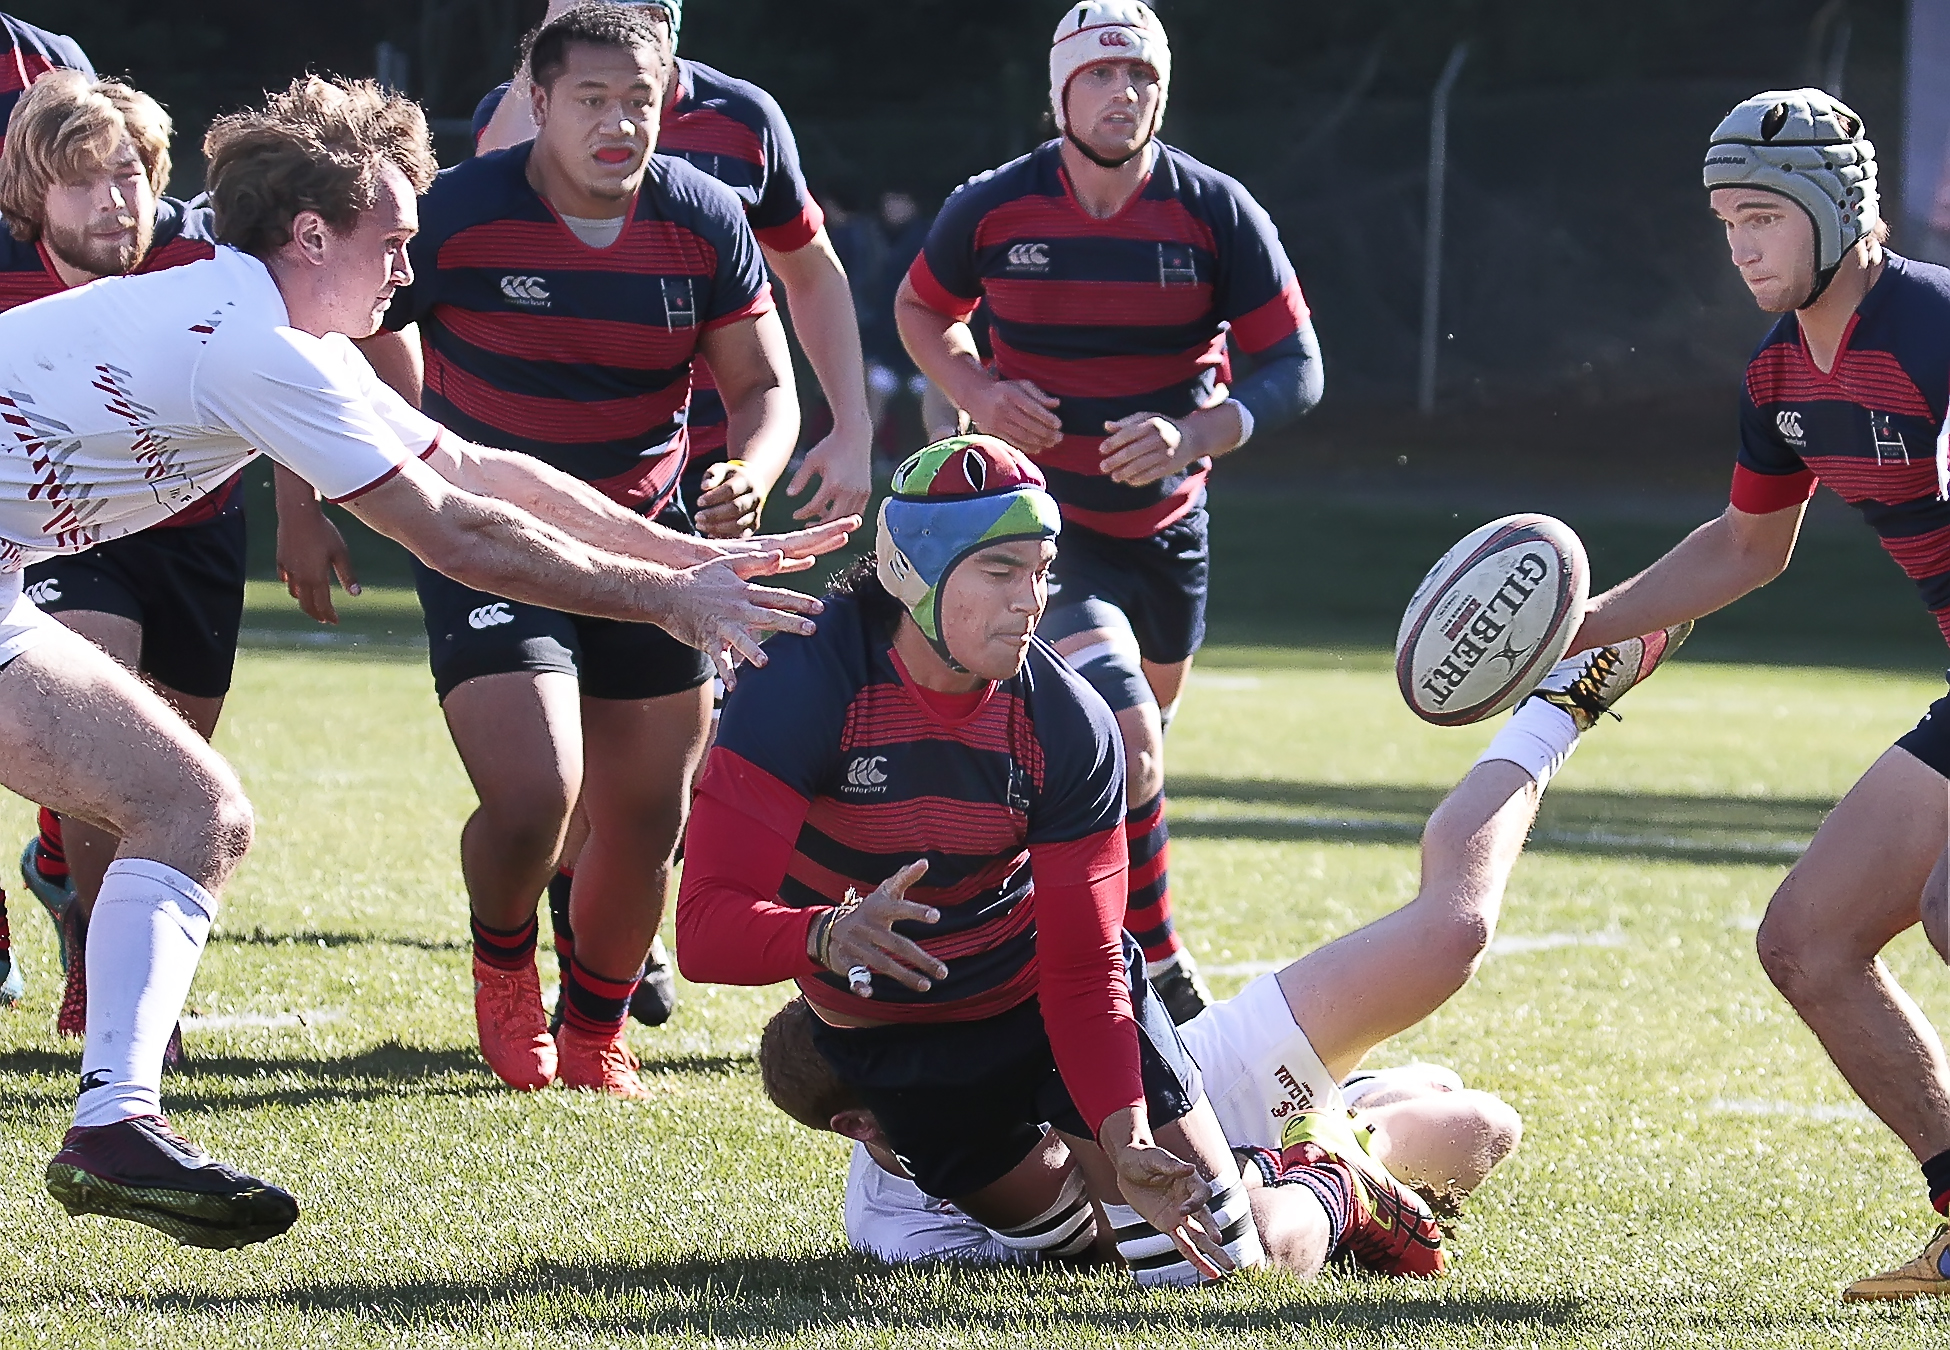 Saint Mary's rugby v Santa Clara Jan 28 2017. Michael Geib photo.